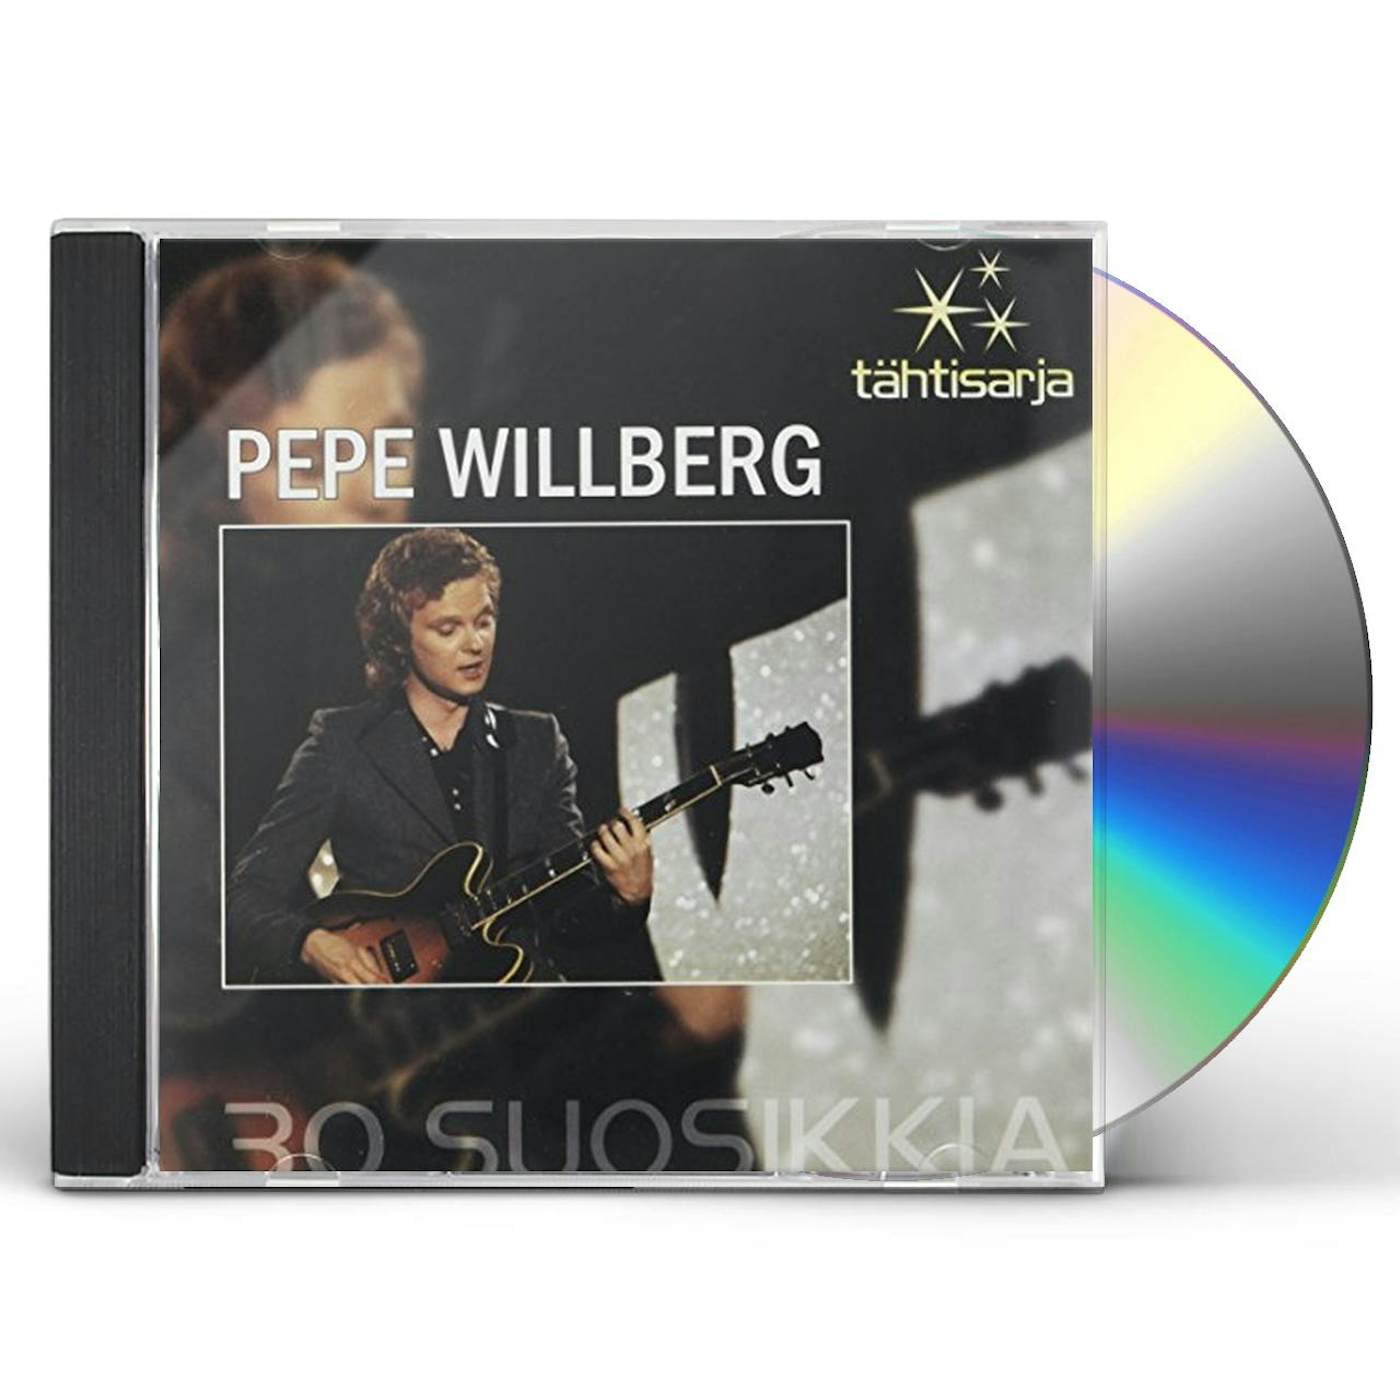 Pepe Willberg TAHTISARJA: 30 SUOSIKKIA CD